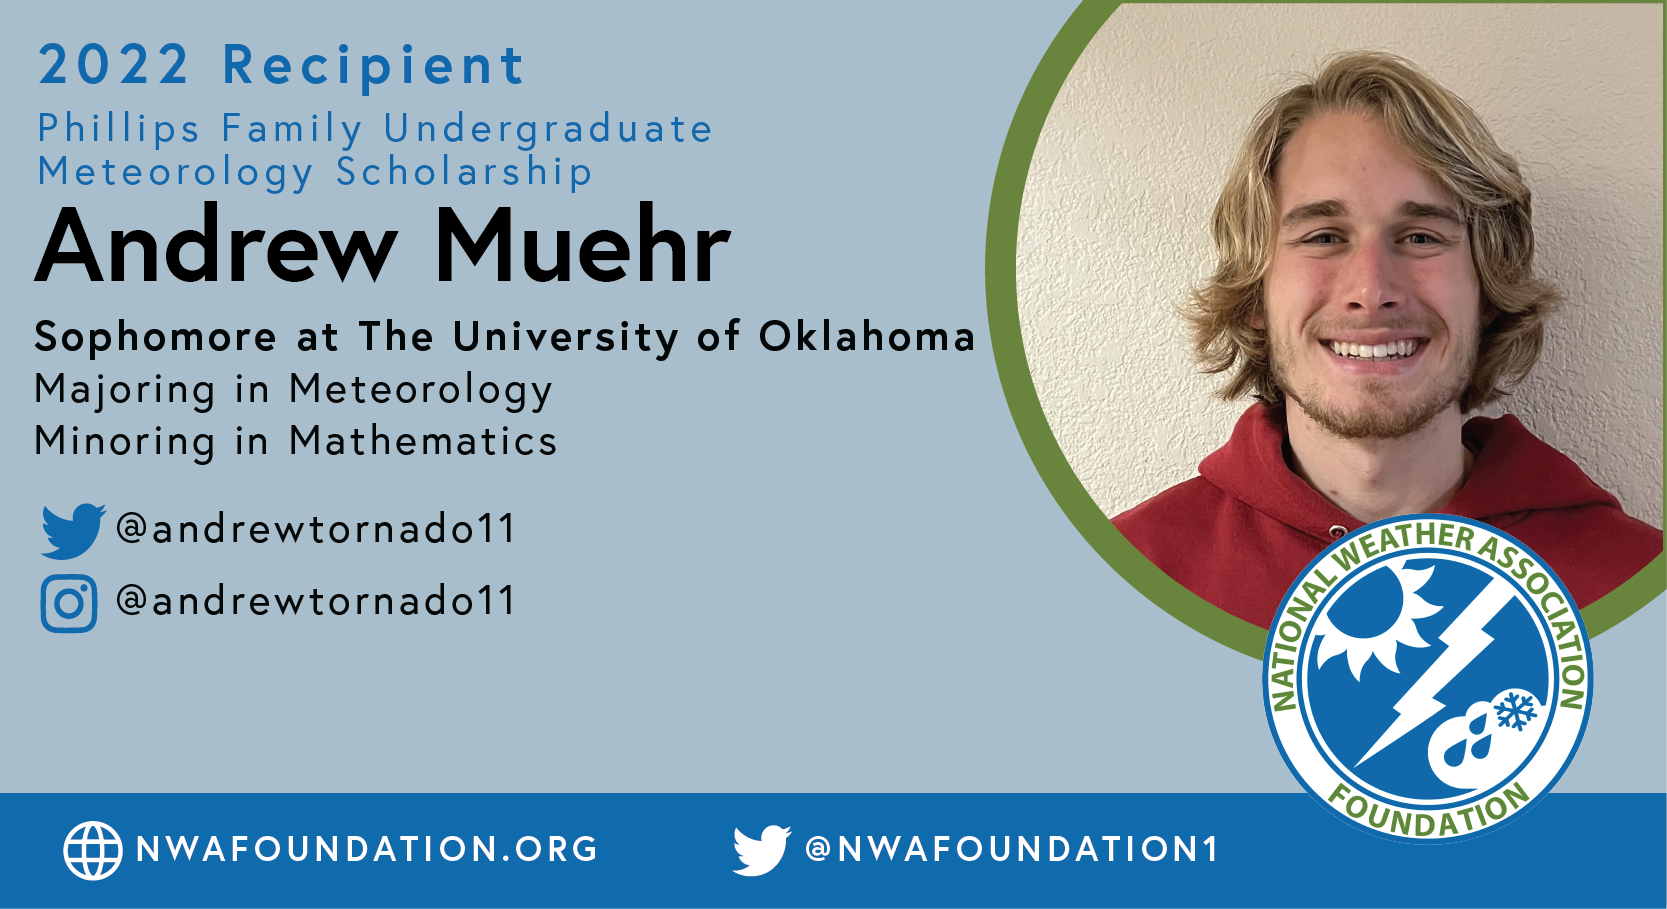 Andrew Muehr Sophomore at The University of Oklahoma Majoring in Meteorology Minoring in Mathematics